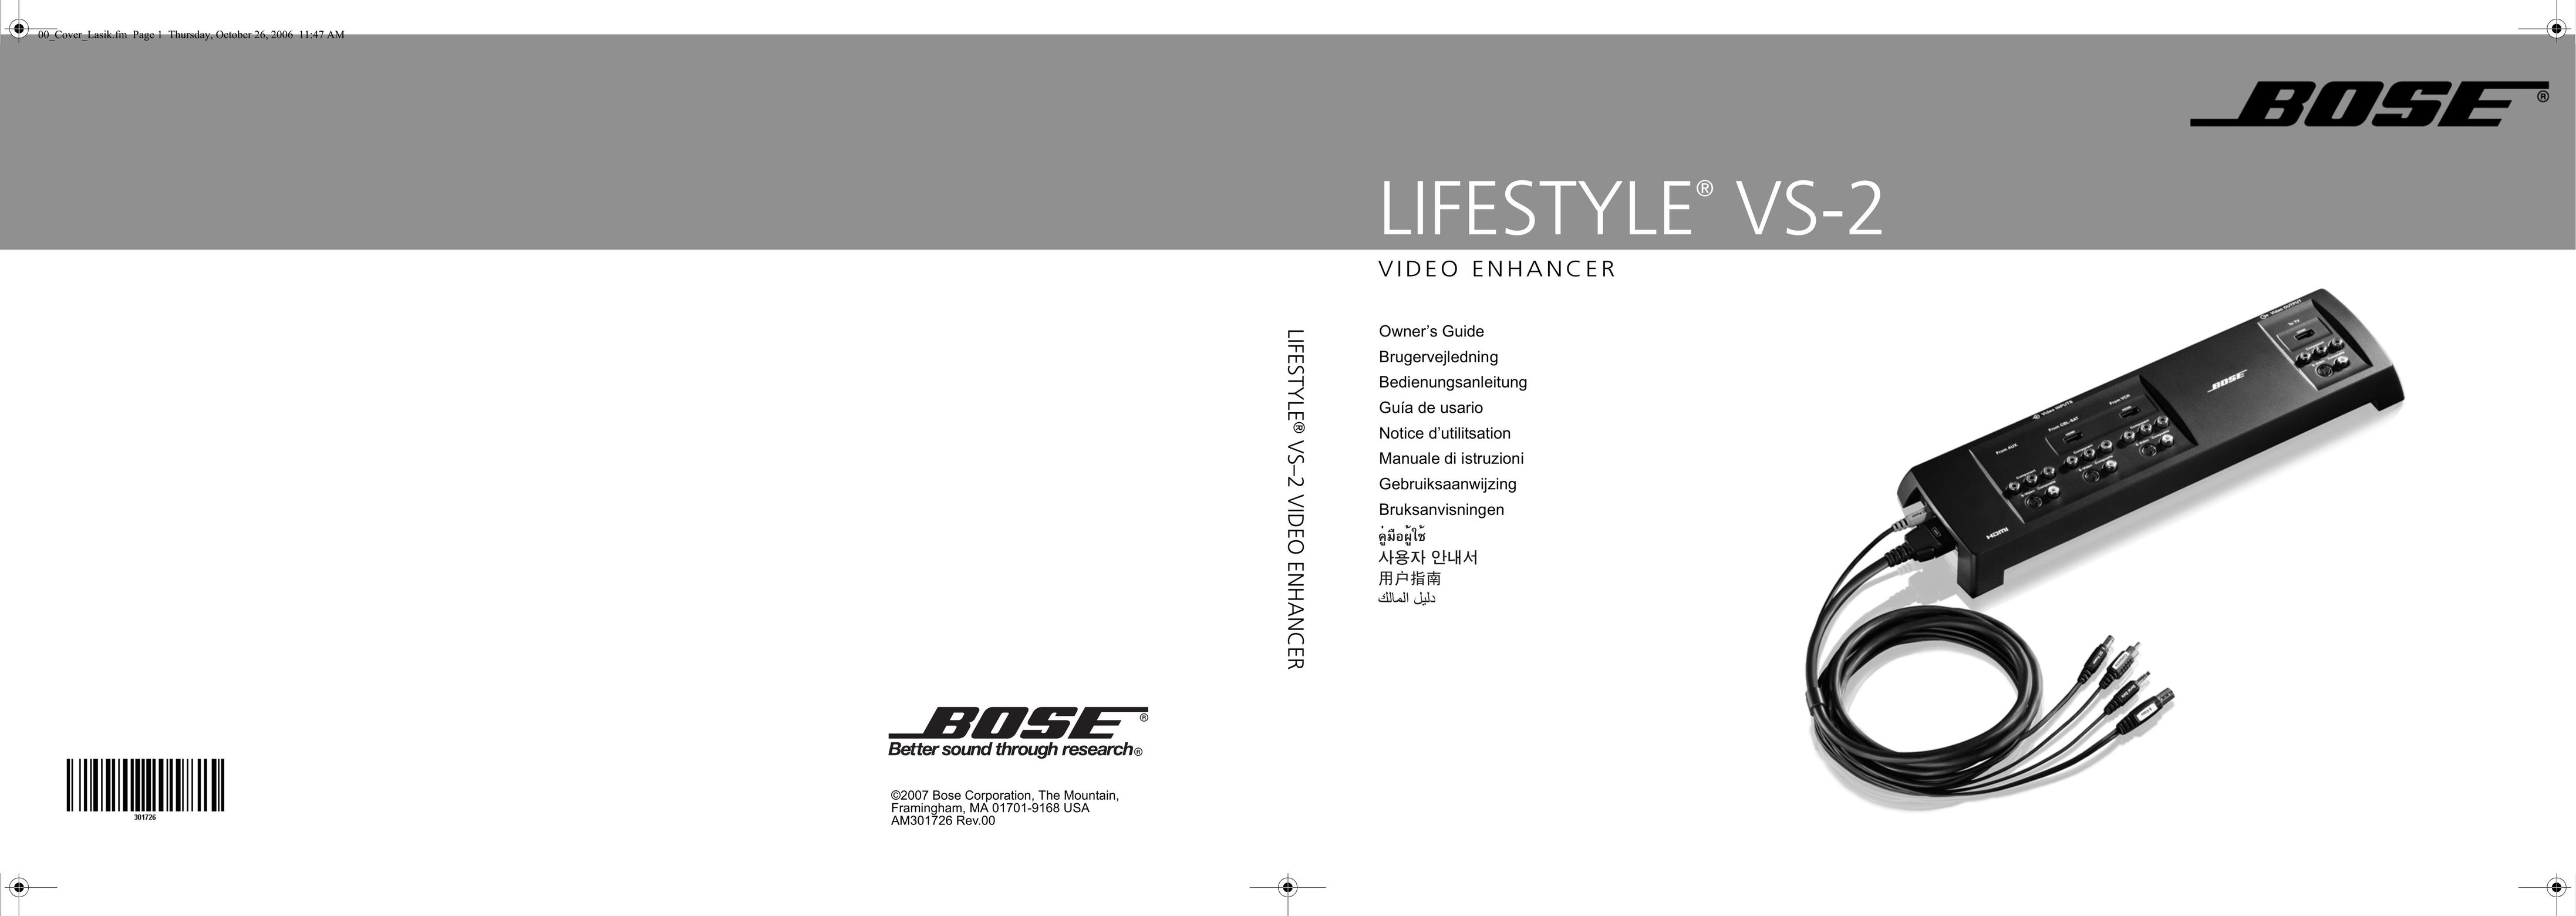 Bose AM301726 TV Video Accessories User Manual